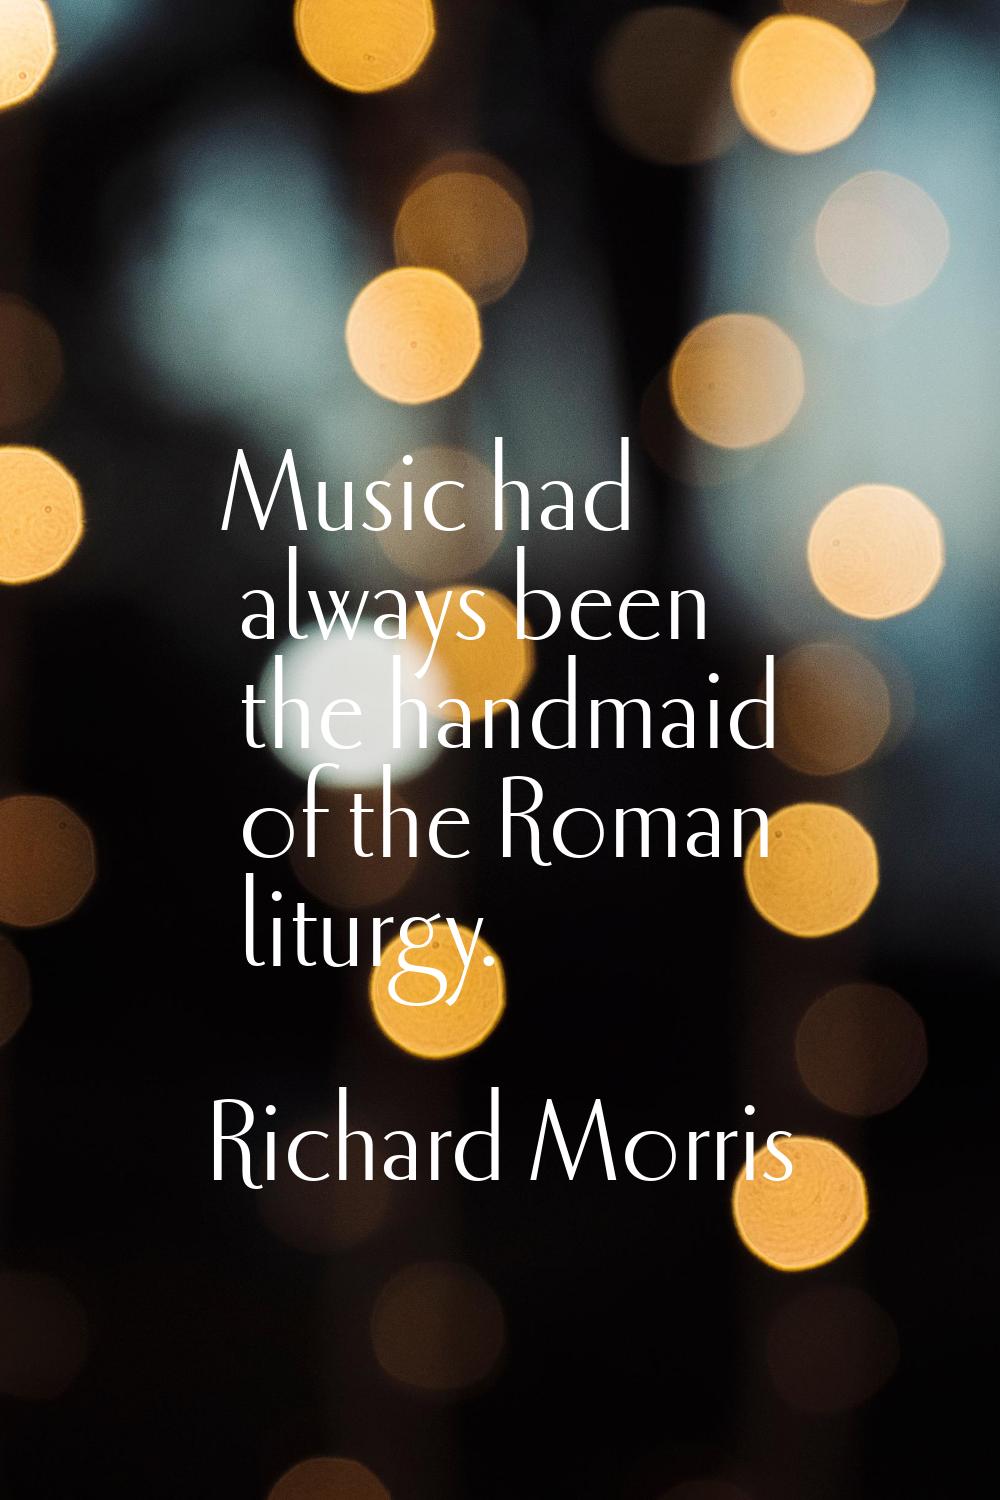 Music had always been the handmaid of the Roman liturgy.